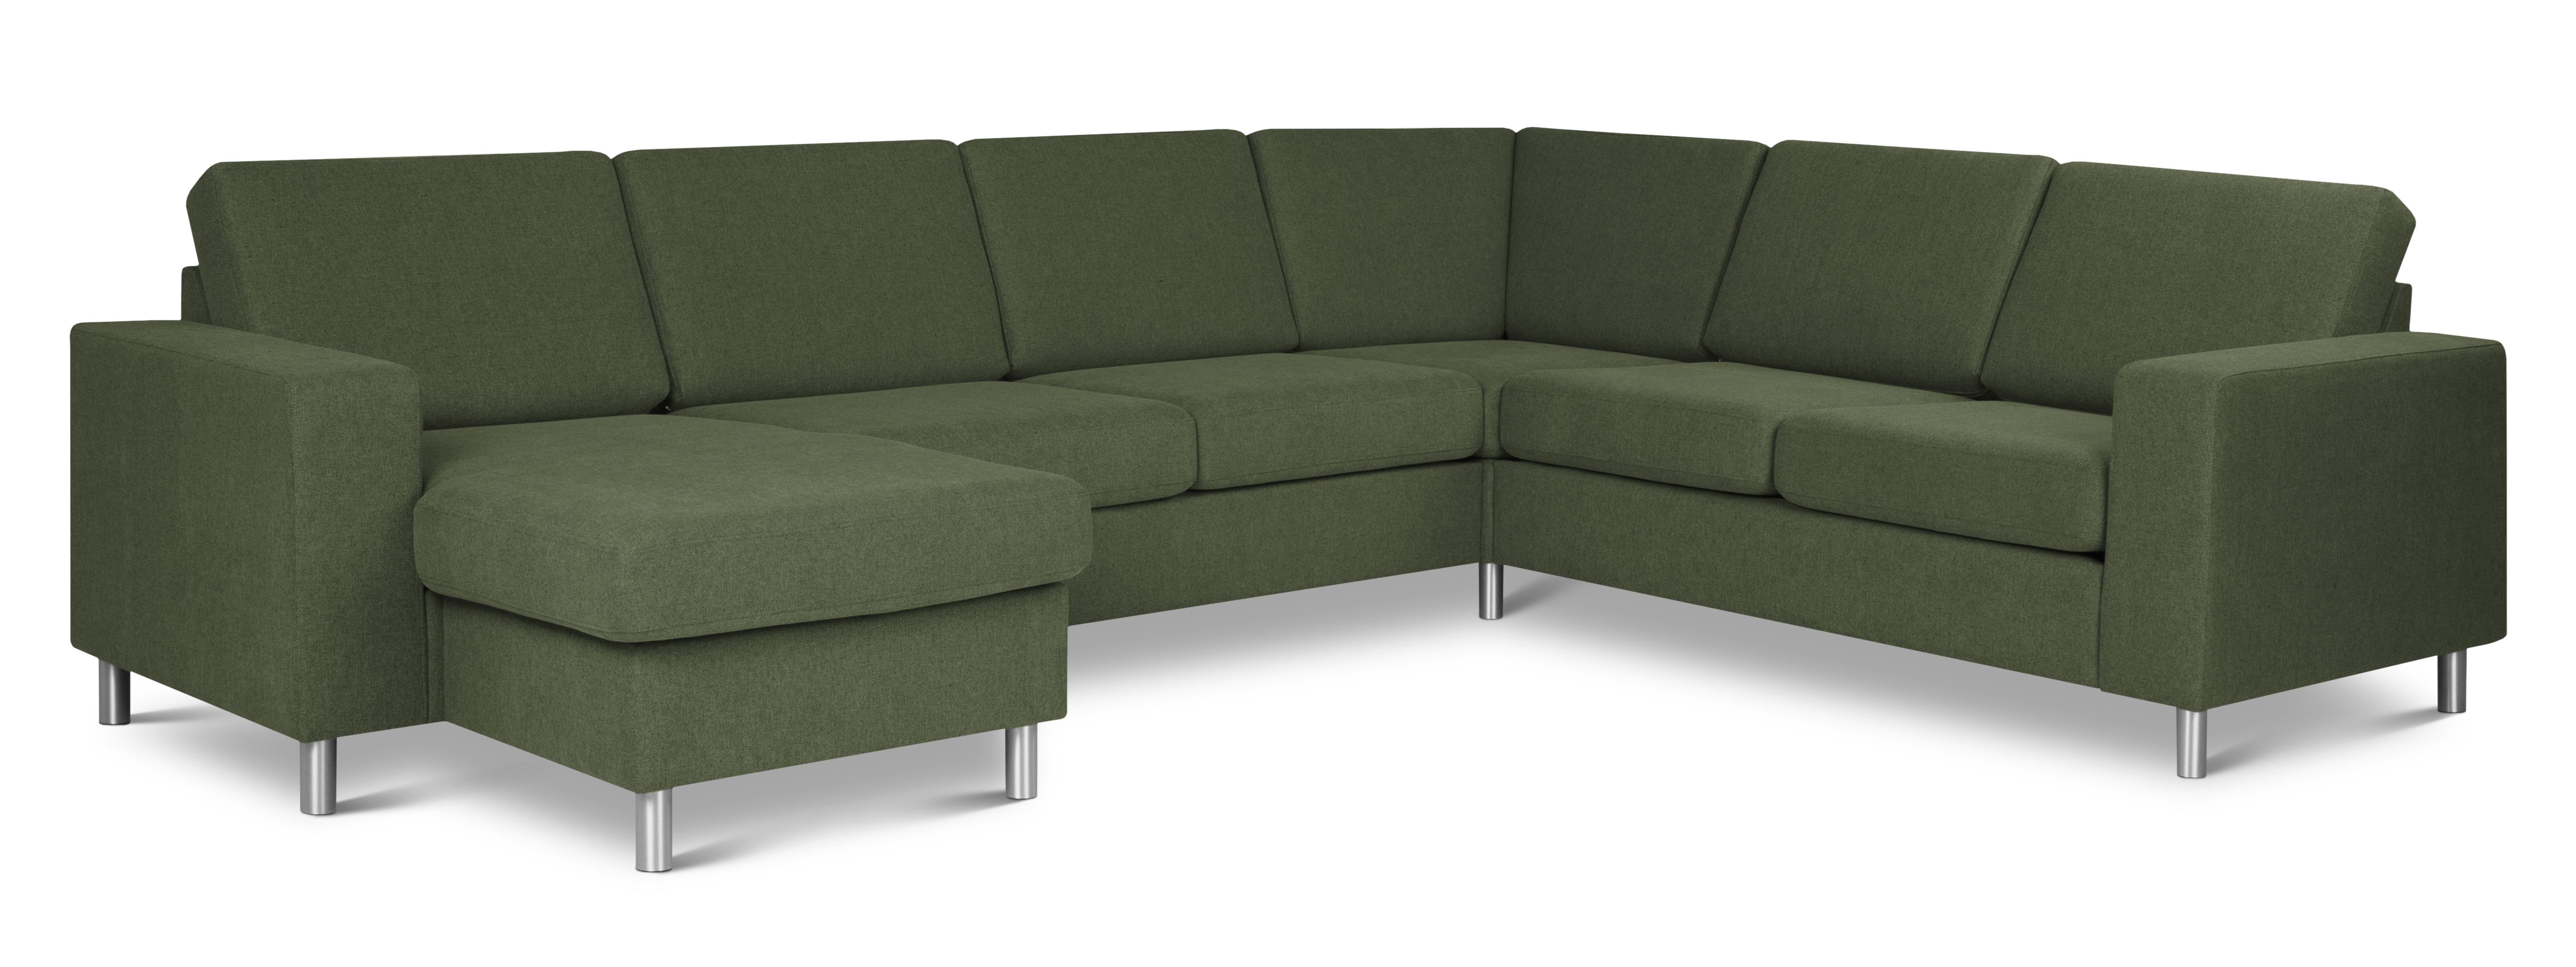 Pan set 6 U 2C3D sofa med chaiselong - vinter mosgrøn polyester stof og børstet aluminium